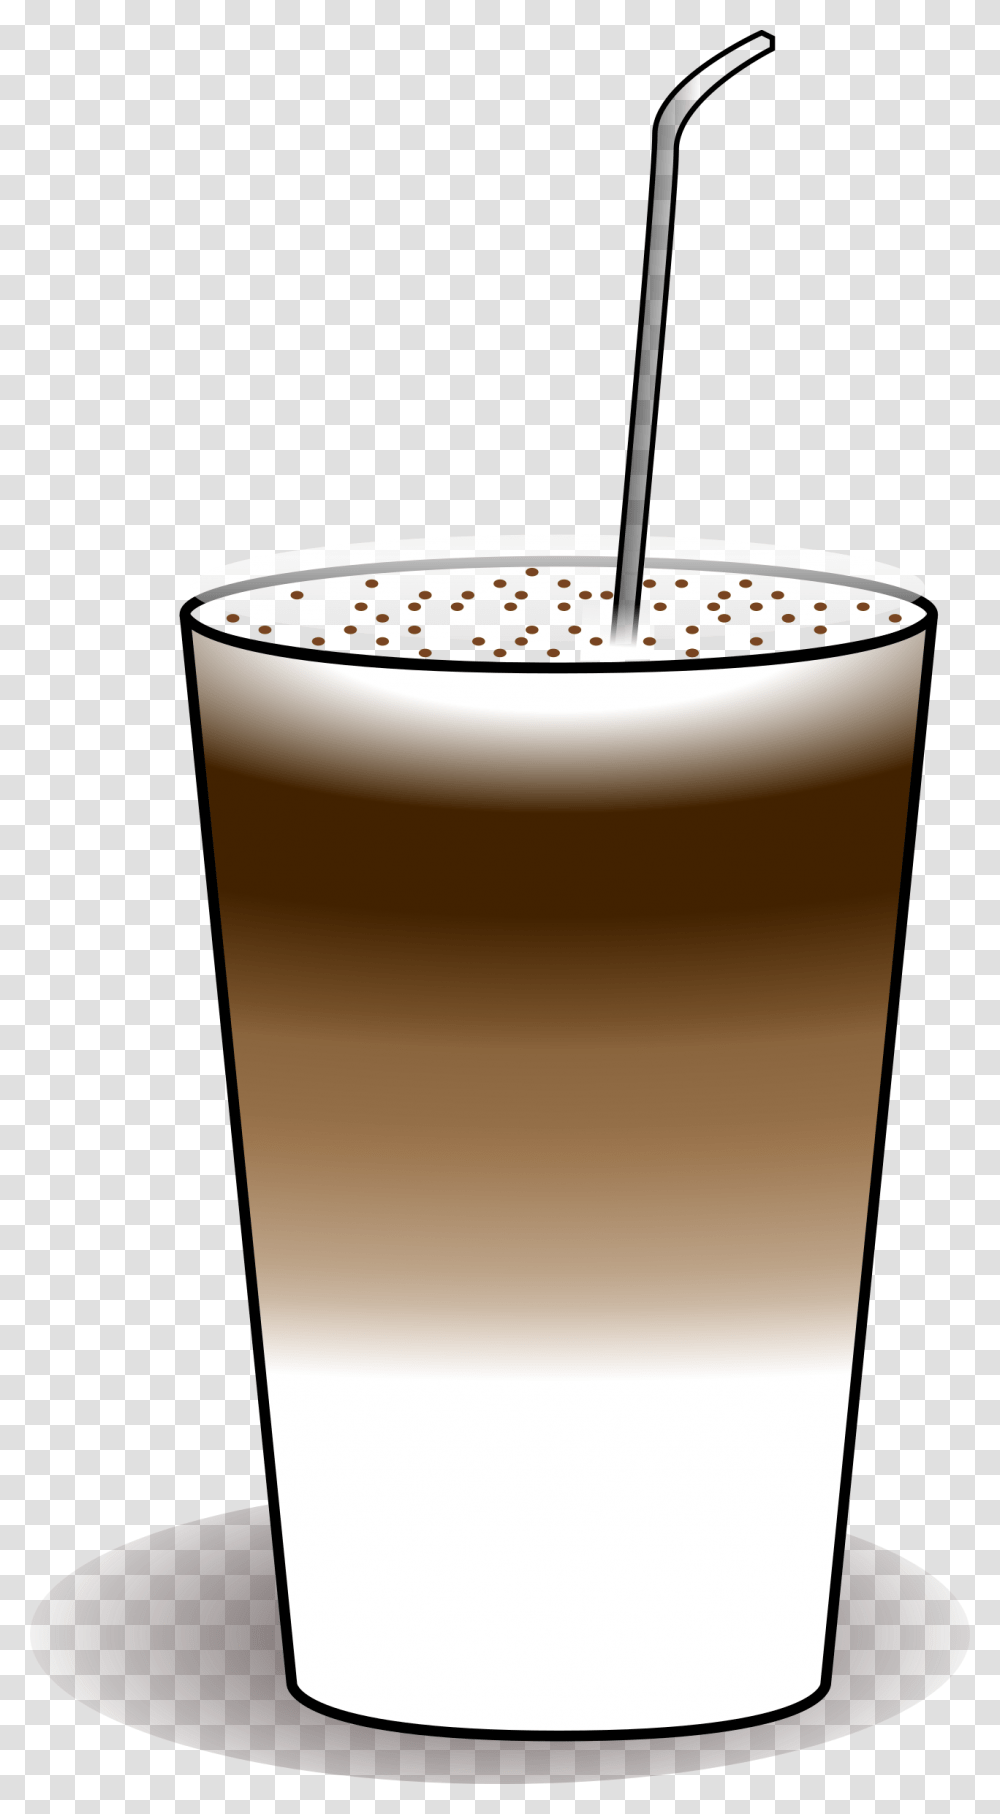 Latte Macchiato Clip Arts Latte Macchiato Clipart, Beverage, Drink, Coffee Cup, Alcohol Transparent Png